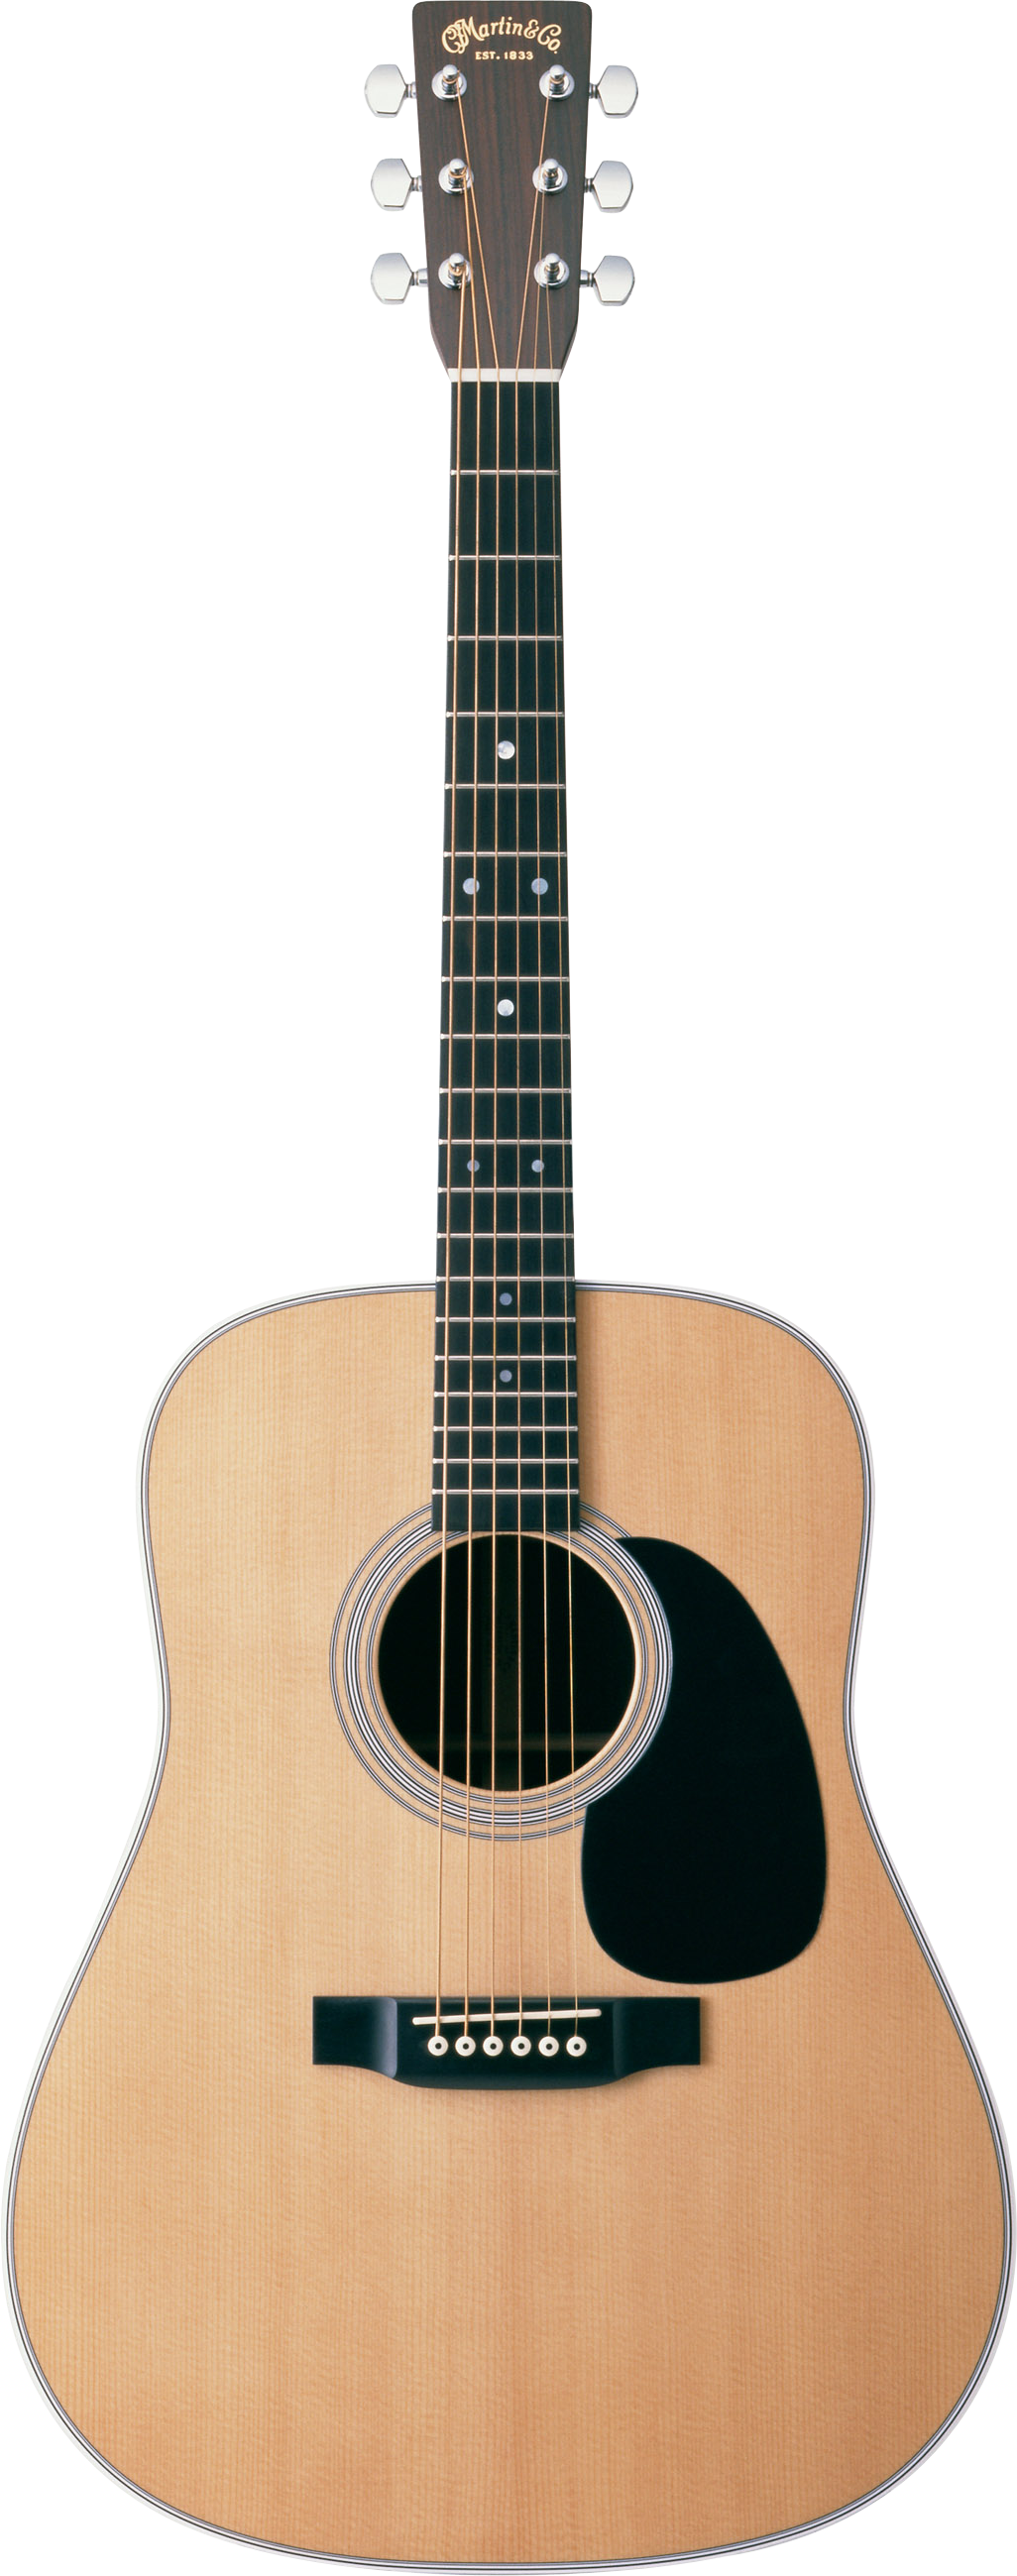 Acoustic Wood Guitar Download Free PNG